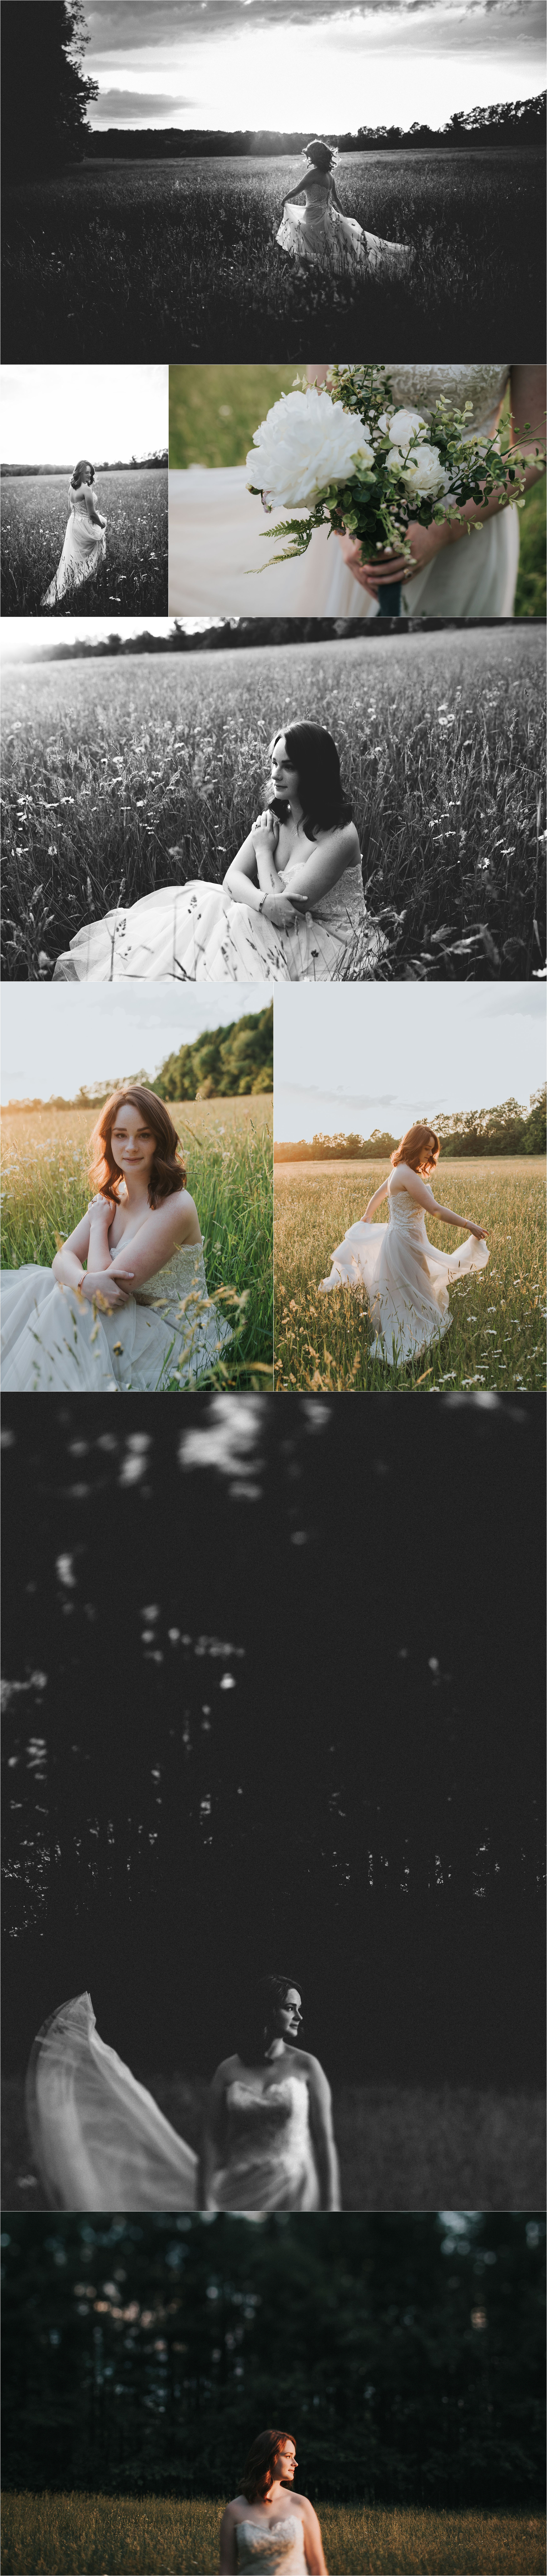 04 sunset-field-bridal-portraits-oakwood-photo-video.jpg